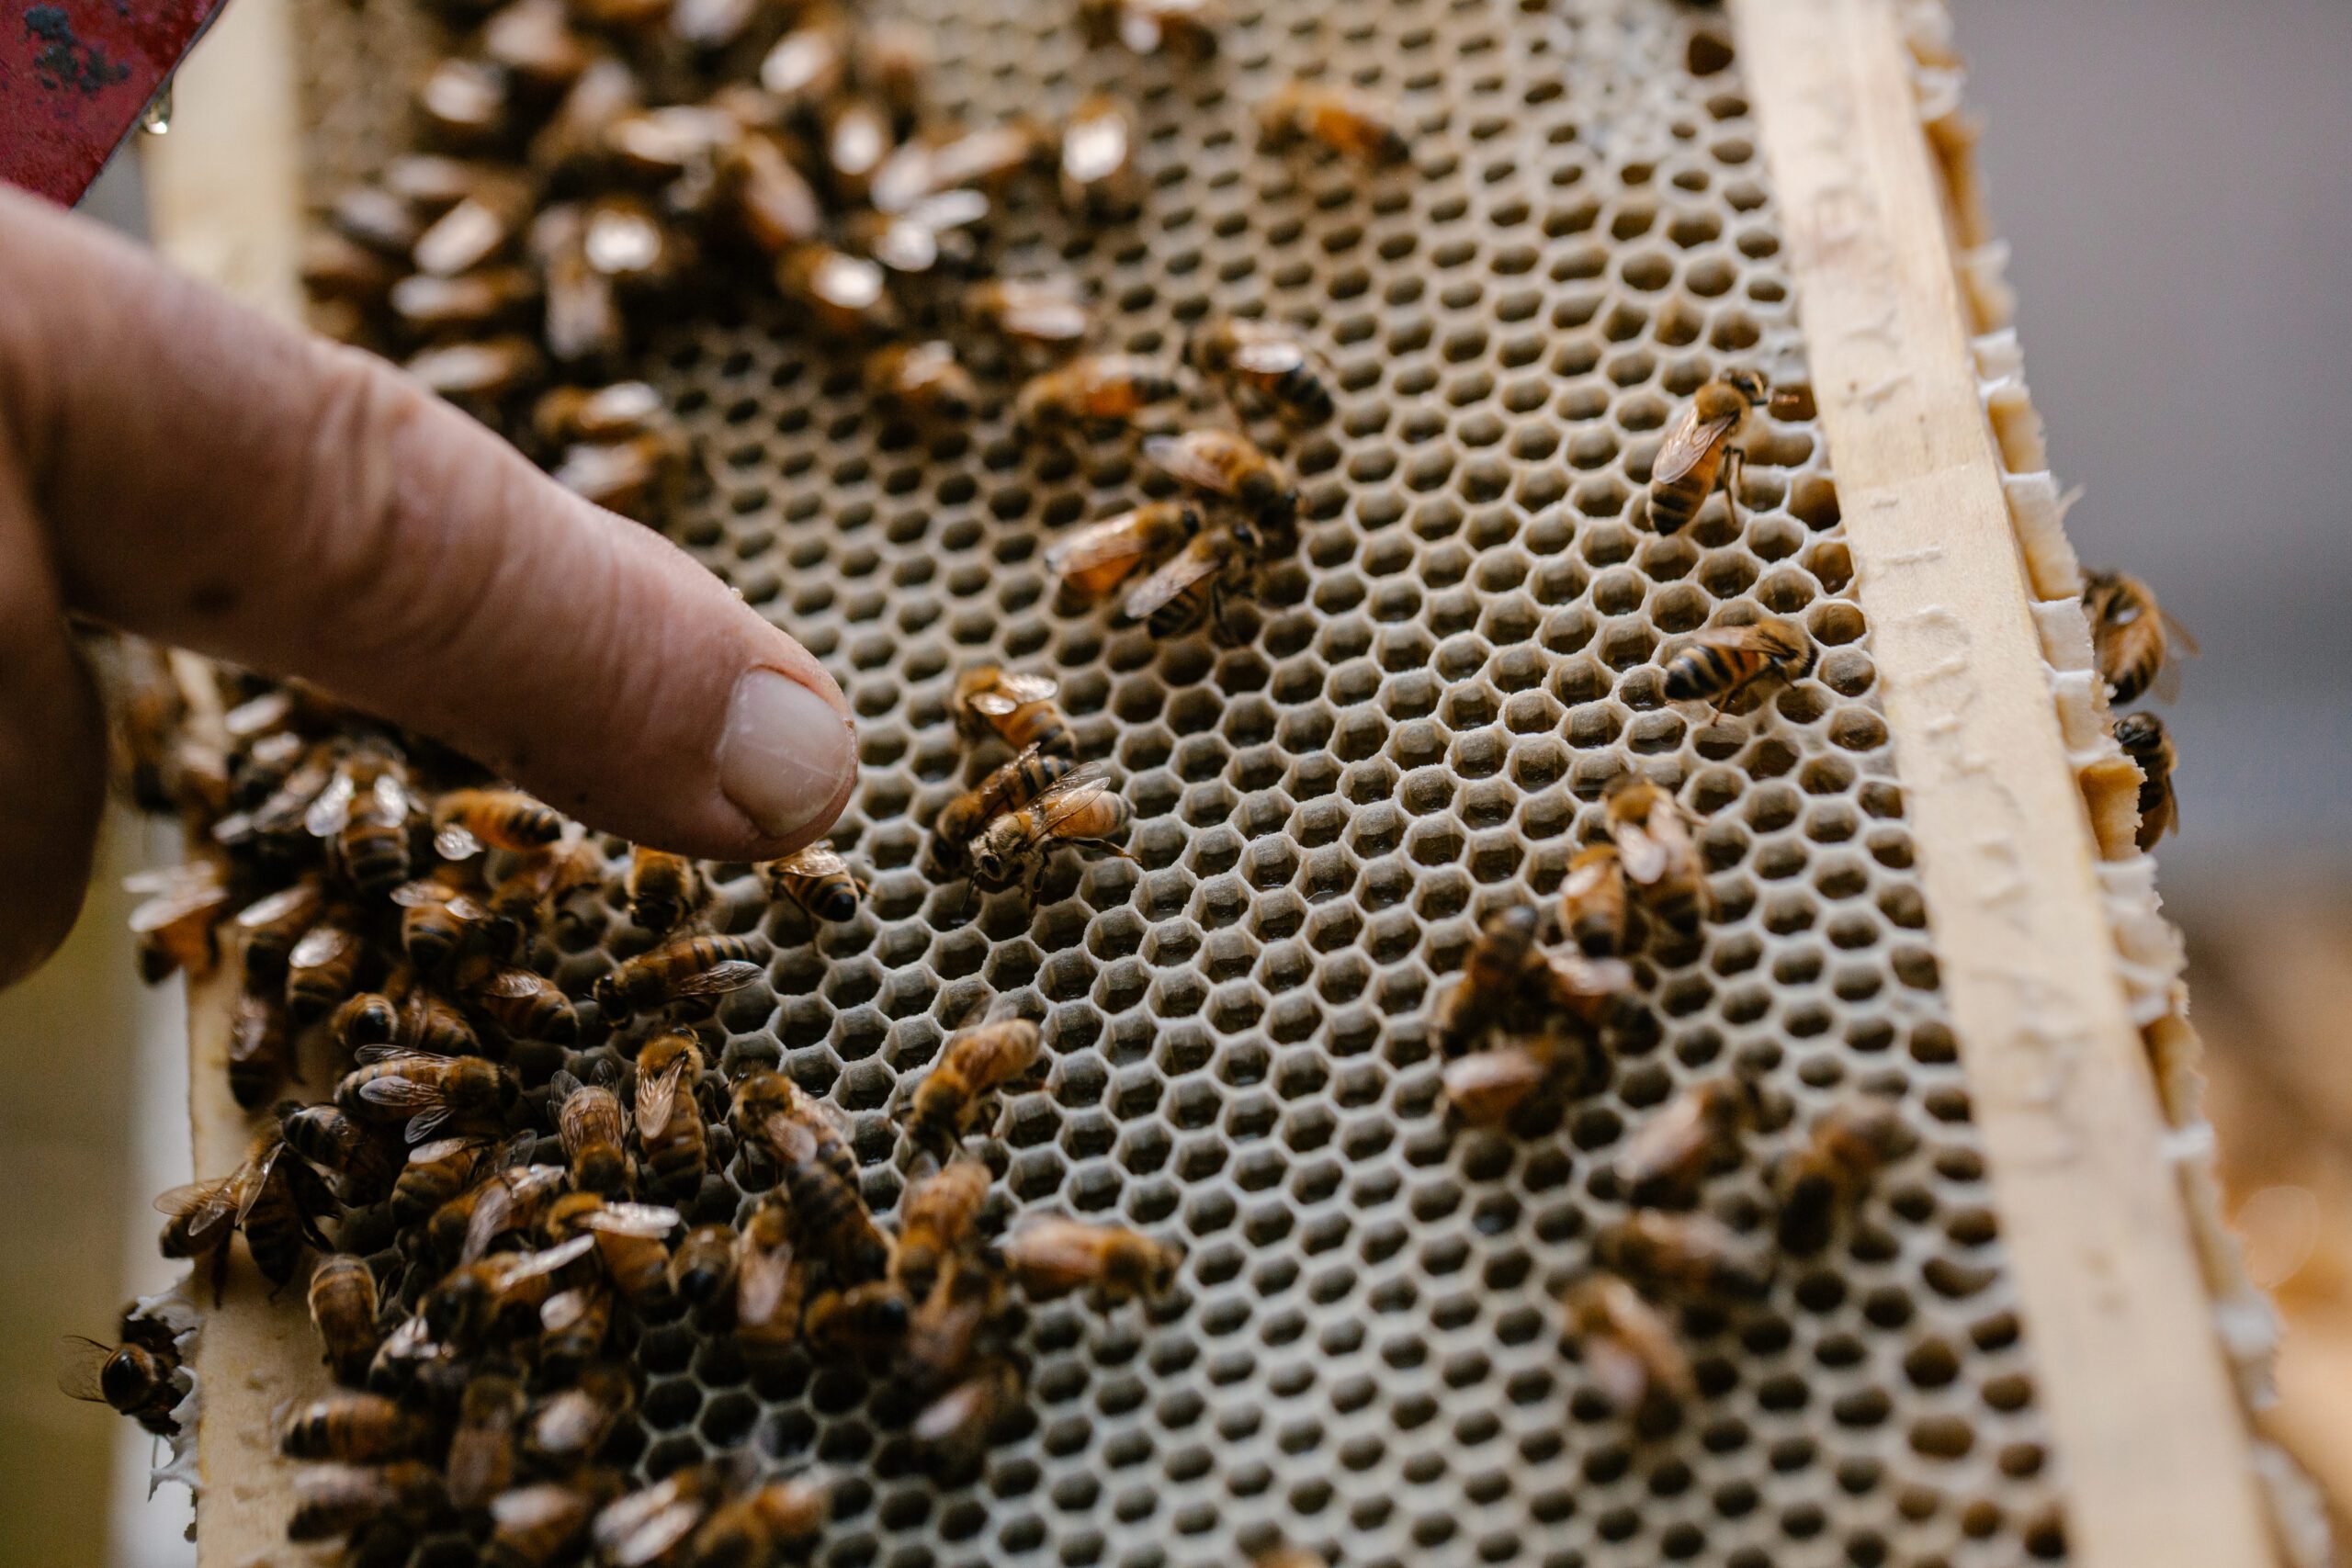 Bees Wax - Yellow Bees Wax Cappings